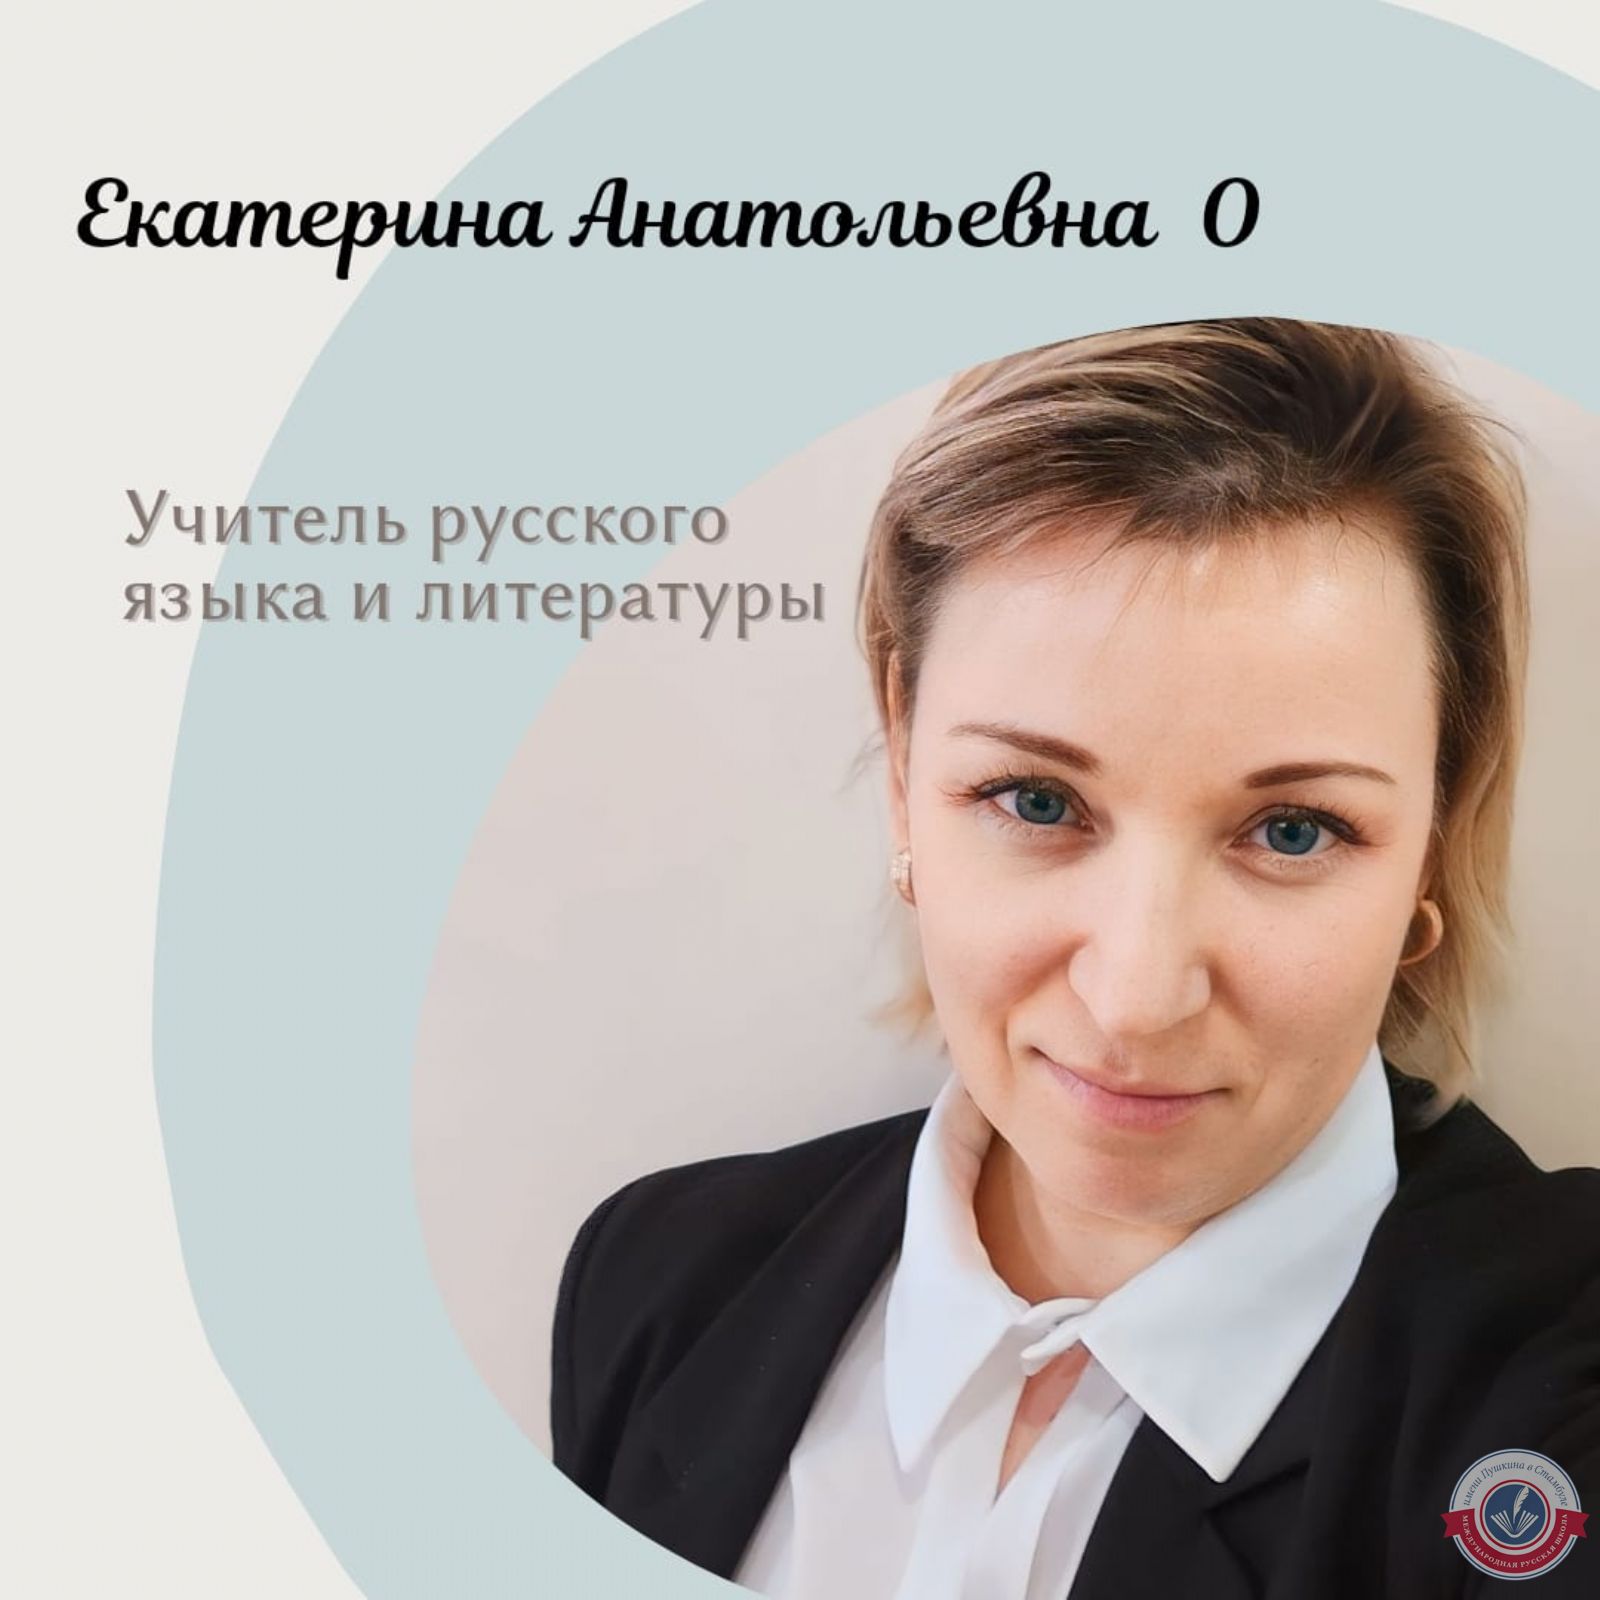 Екатерина Анатольевна О